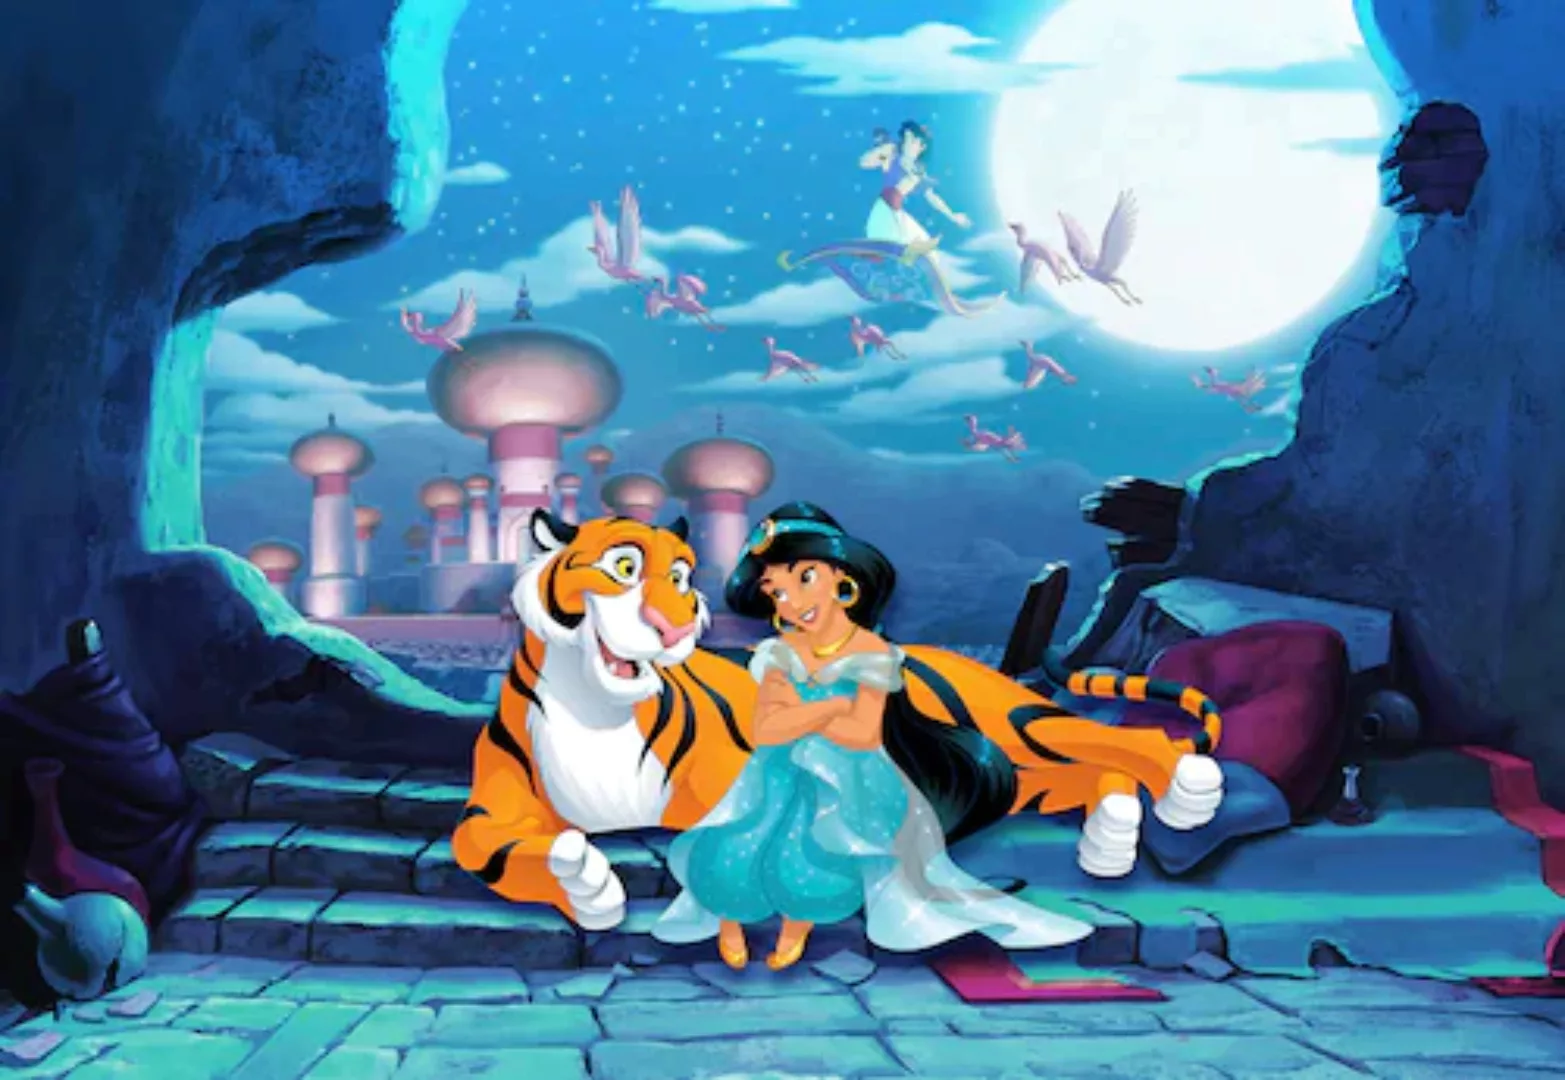 Komar Fototapete Waiting for Aladdin  368 x 254 cm günstig online kaufen